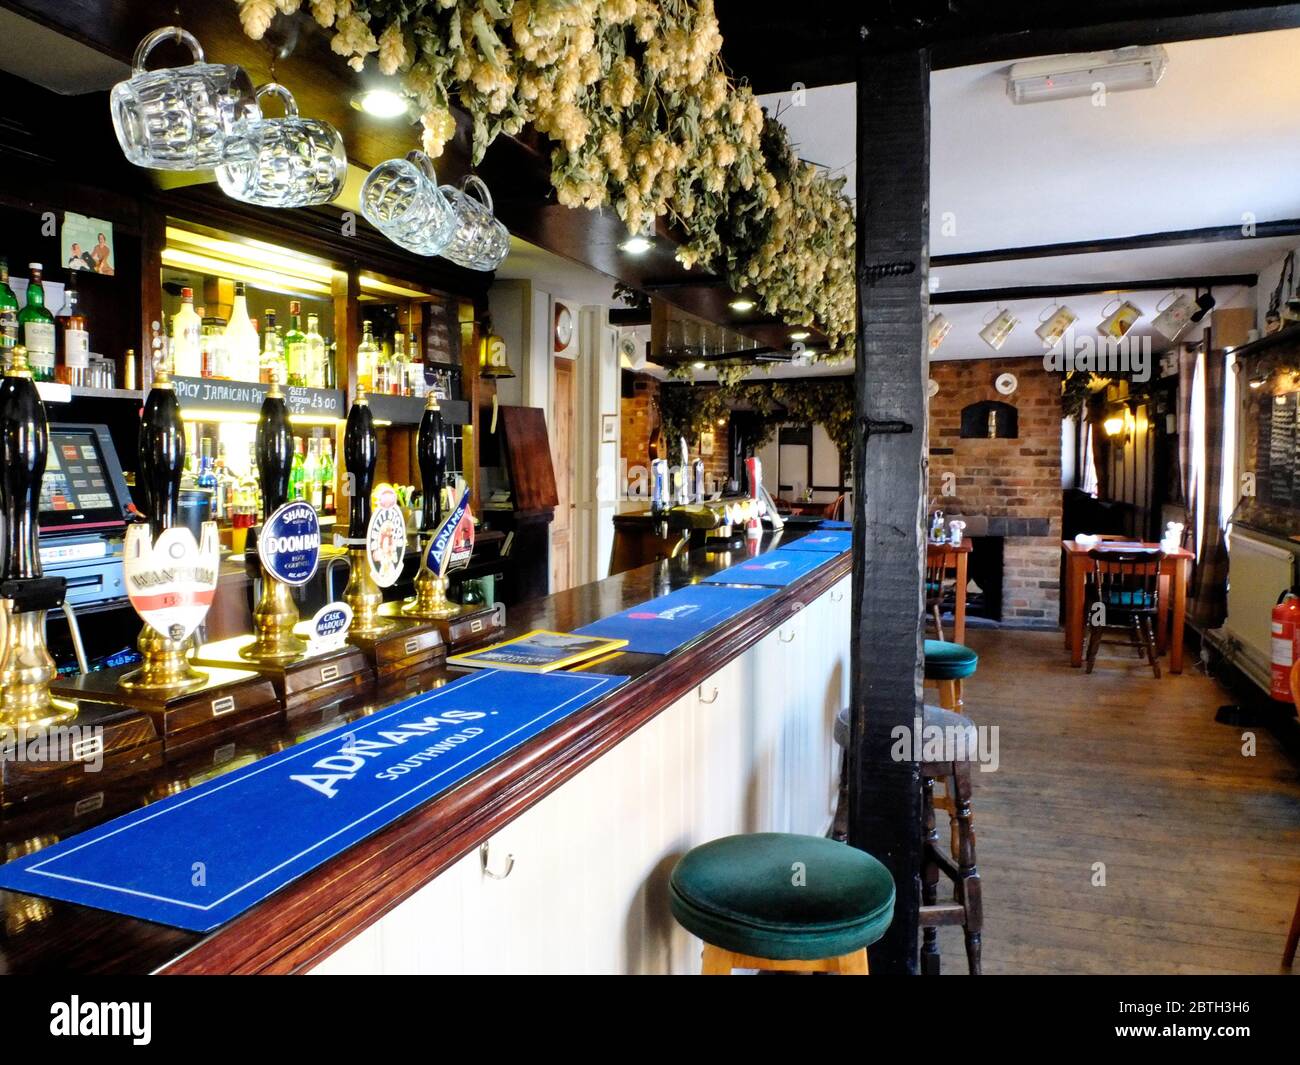 English pub interior showing bar, pint glasses, hops and barstools. Stock Photo